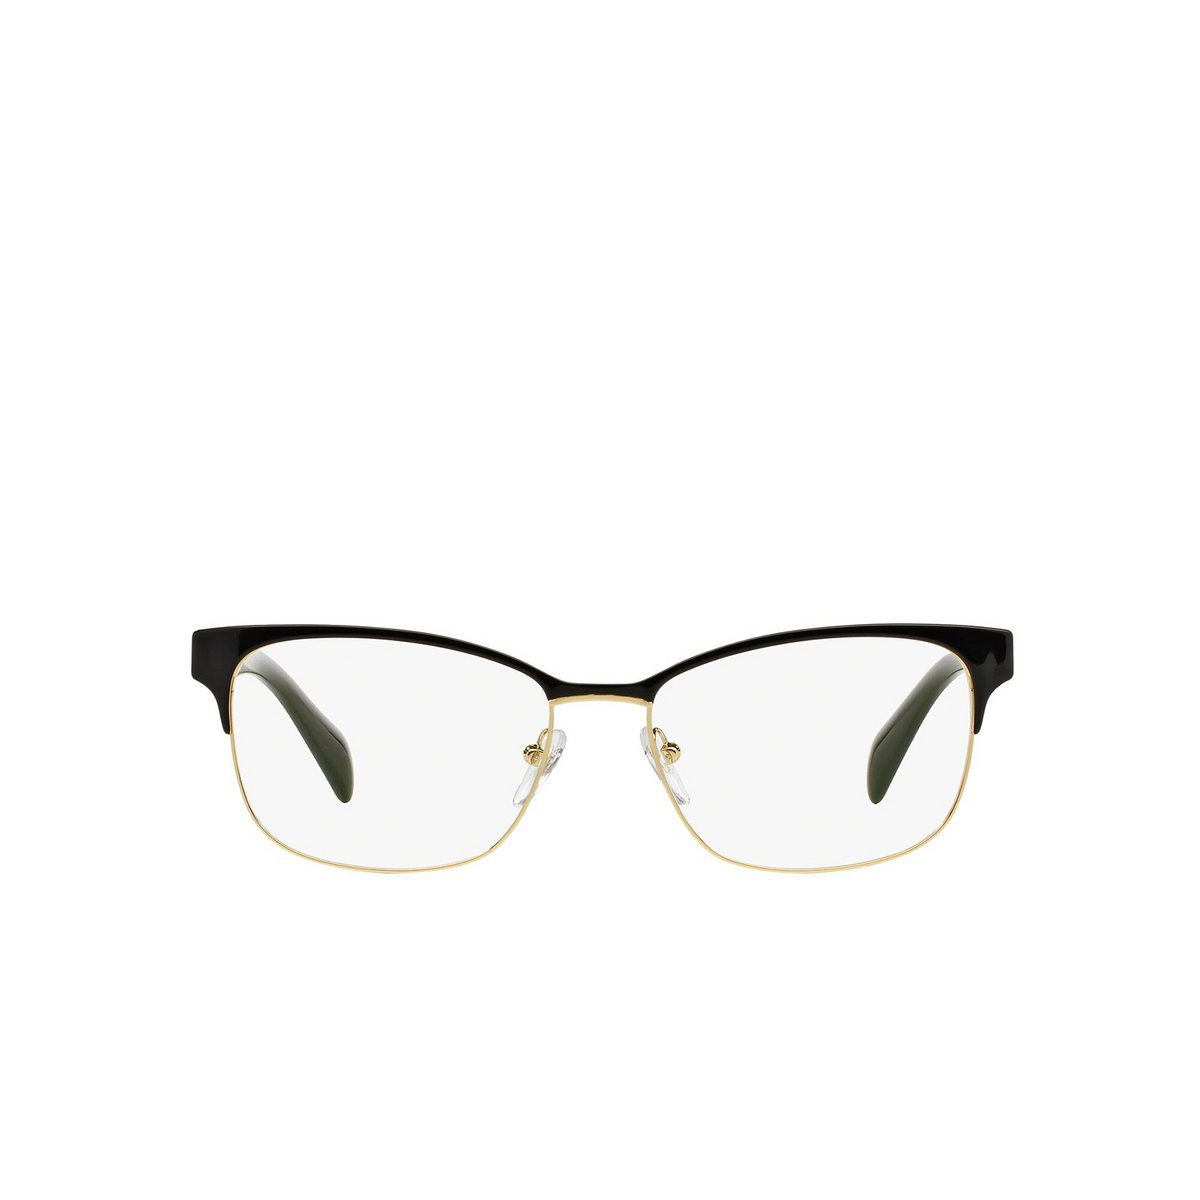 Prada CONCEPTUAL Eyeglasses QE31O1 Black on Pale Gold - front view